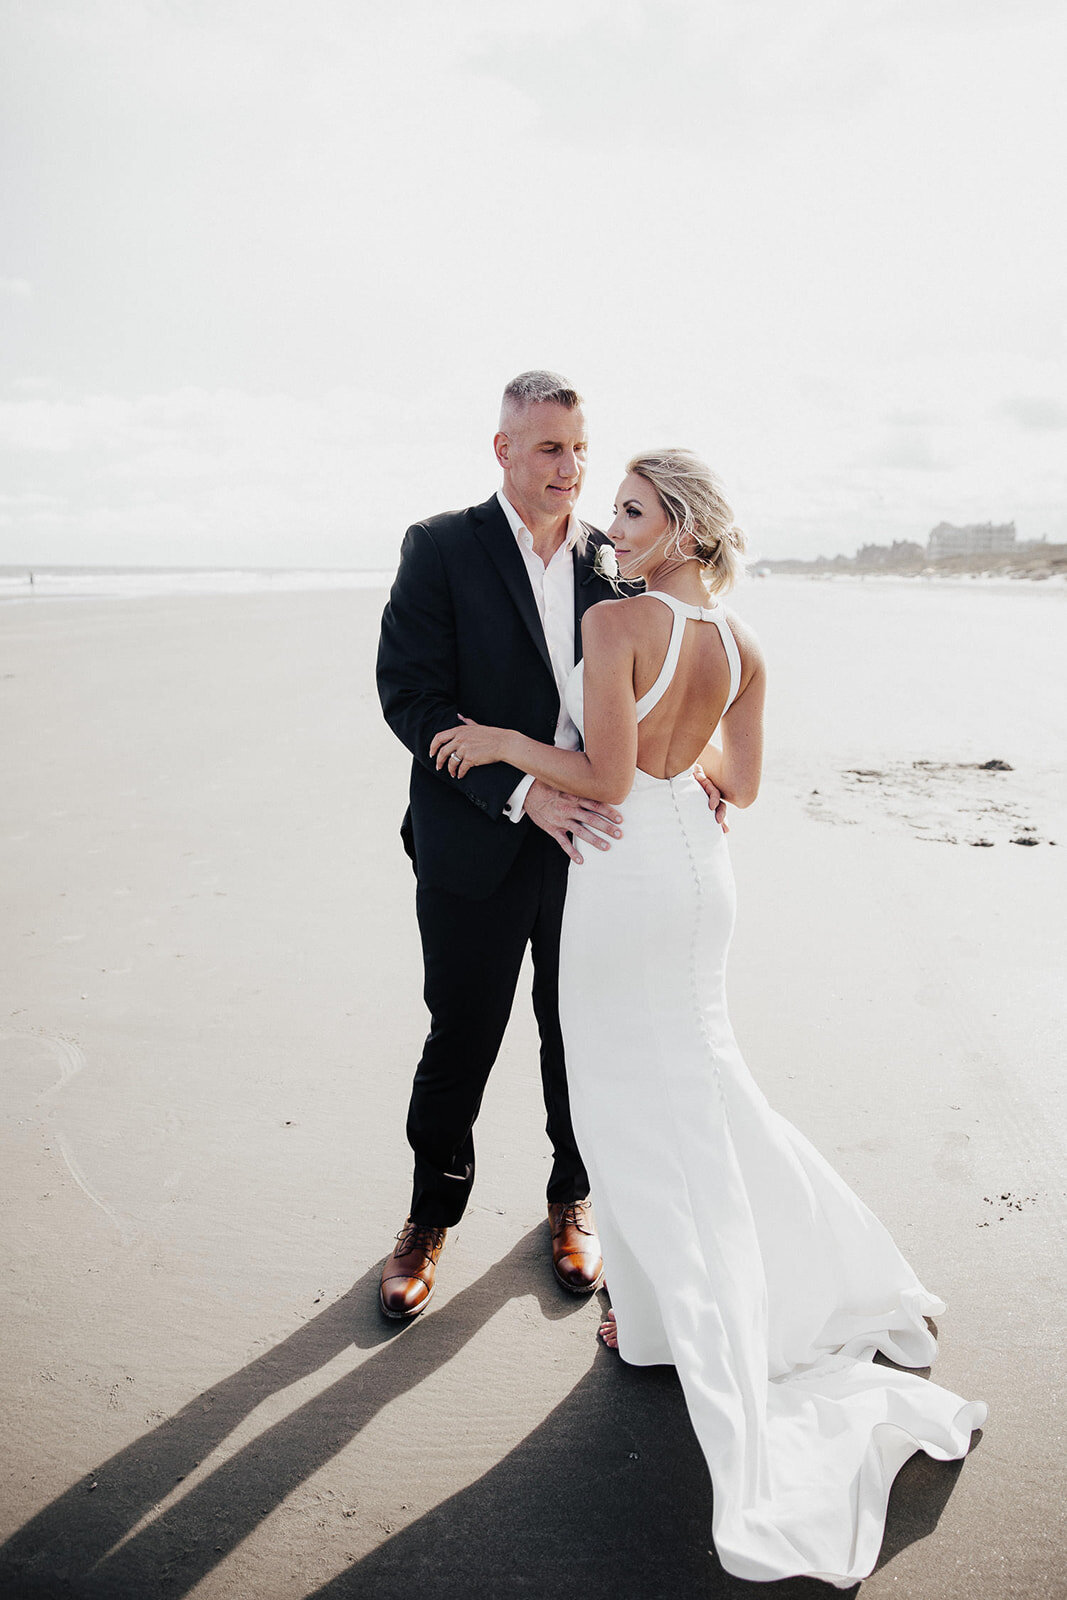 Elegant wedding couple standing at beach casting shadows